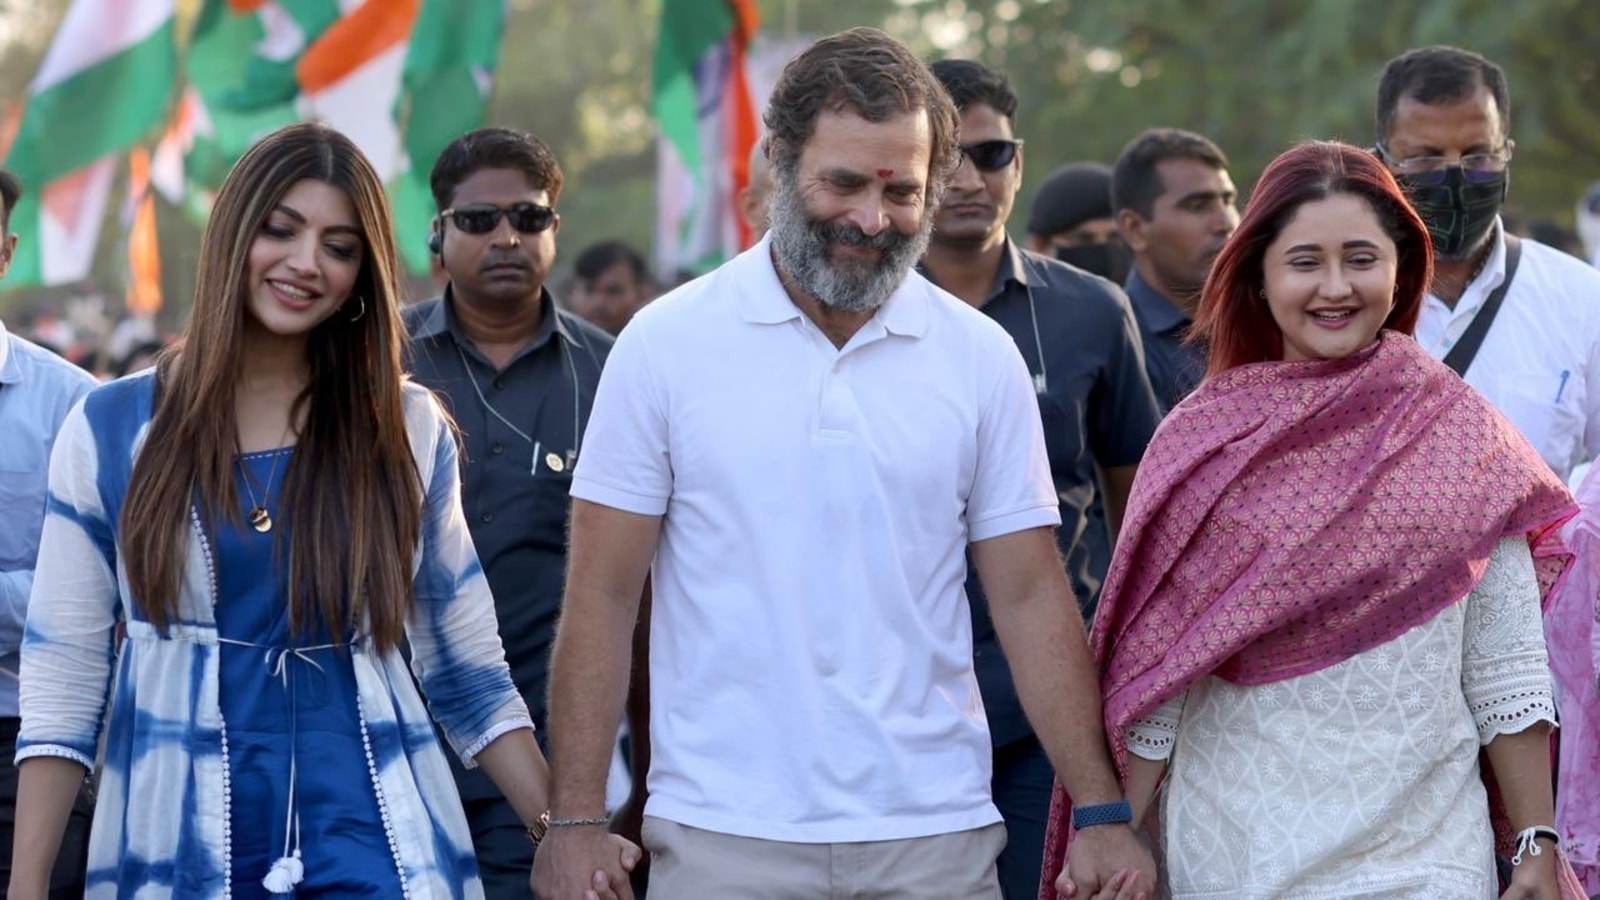 Rahul Gandhi holds Rashami Desai's hand as they walk together during